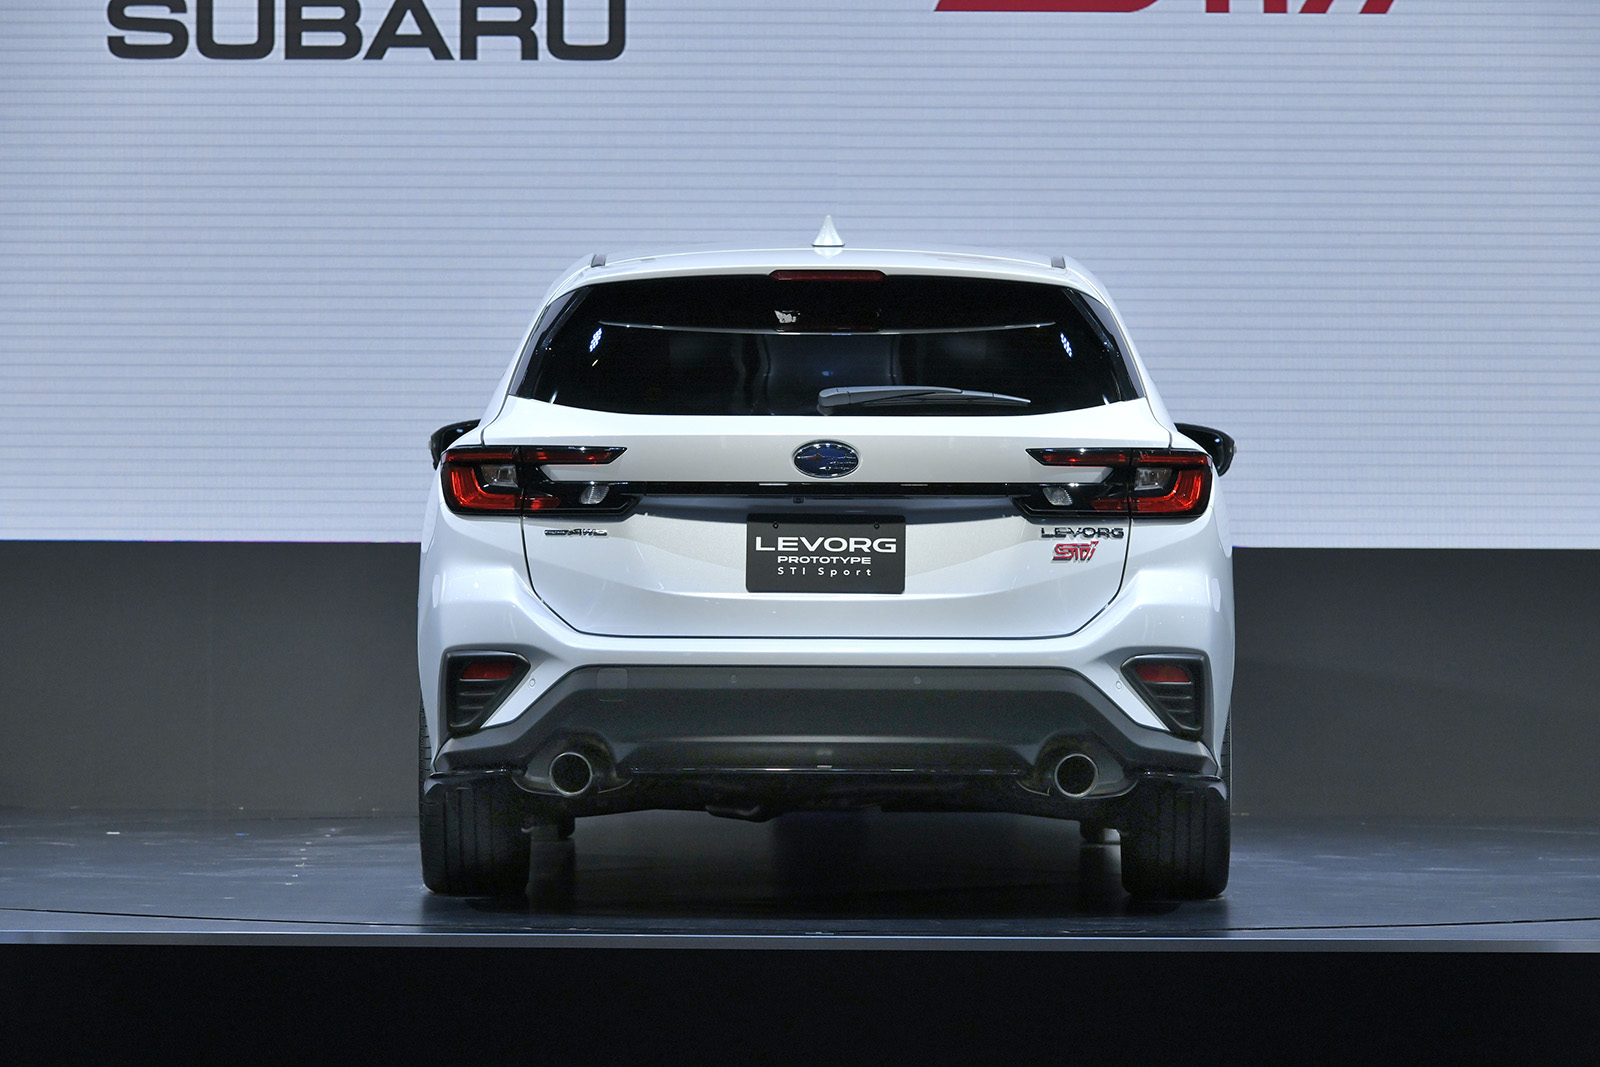 Subaru Levorg Prototype STI Sport